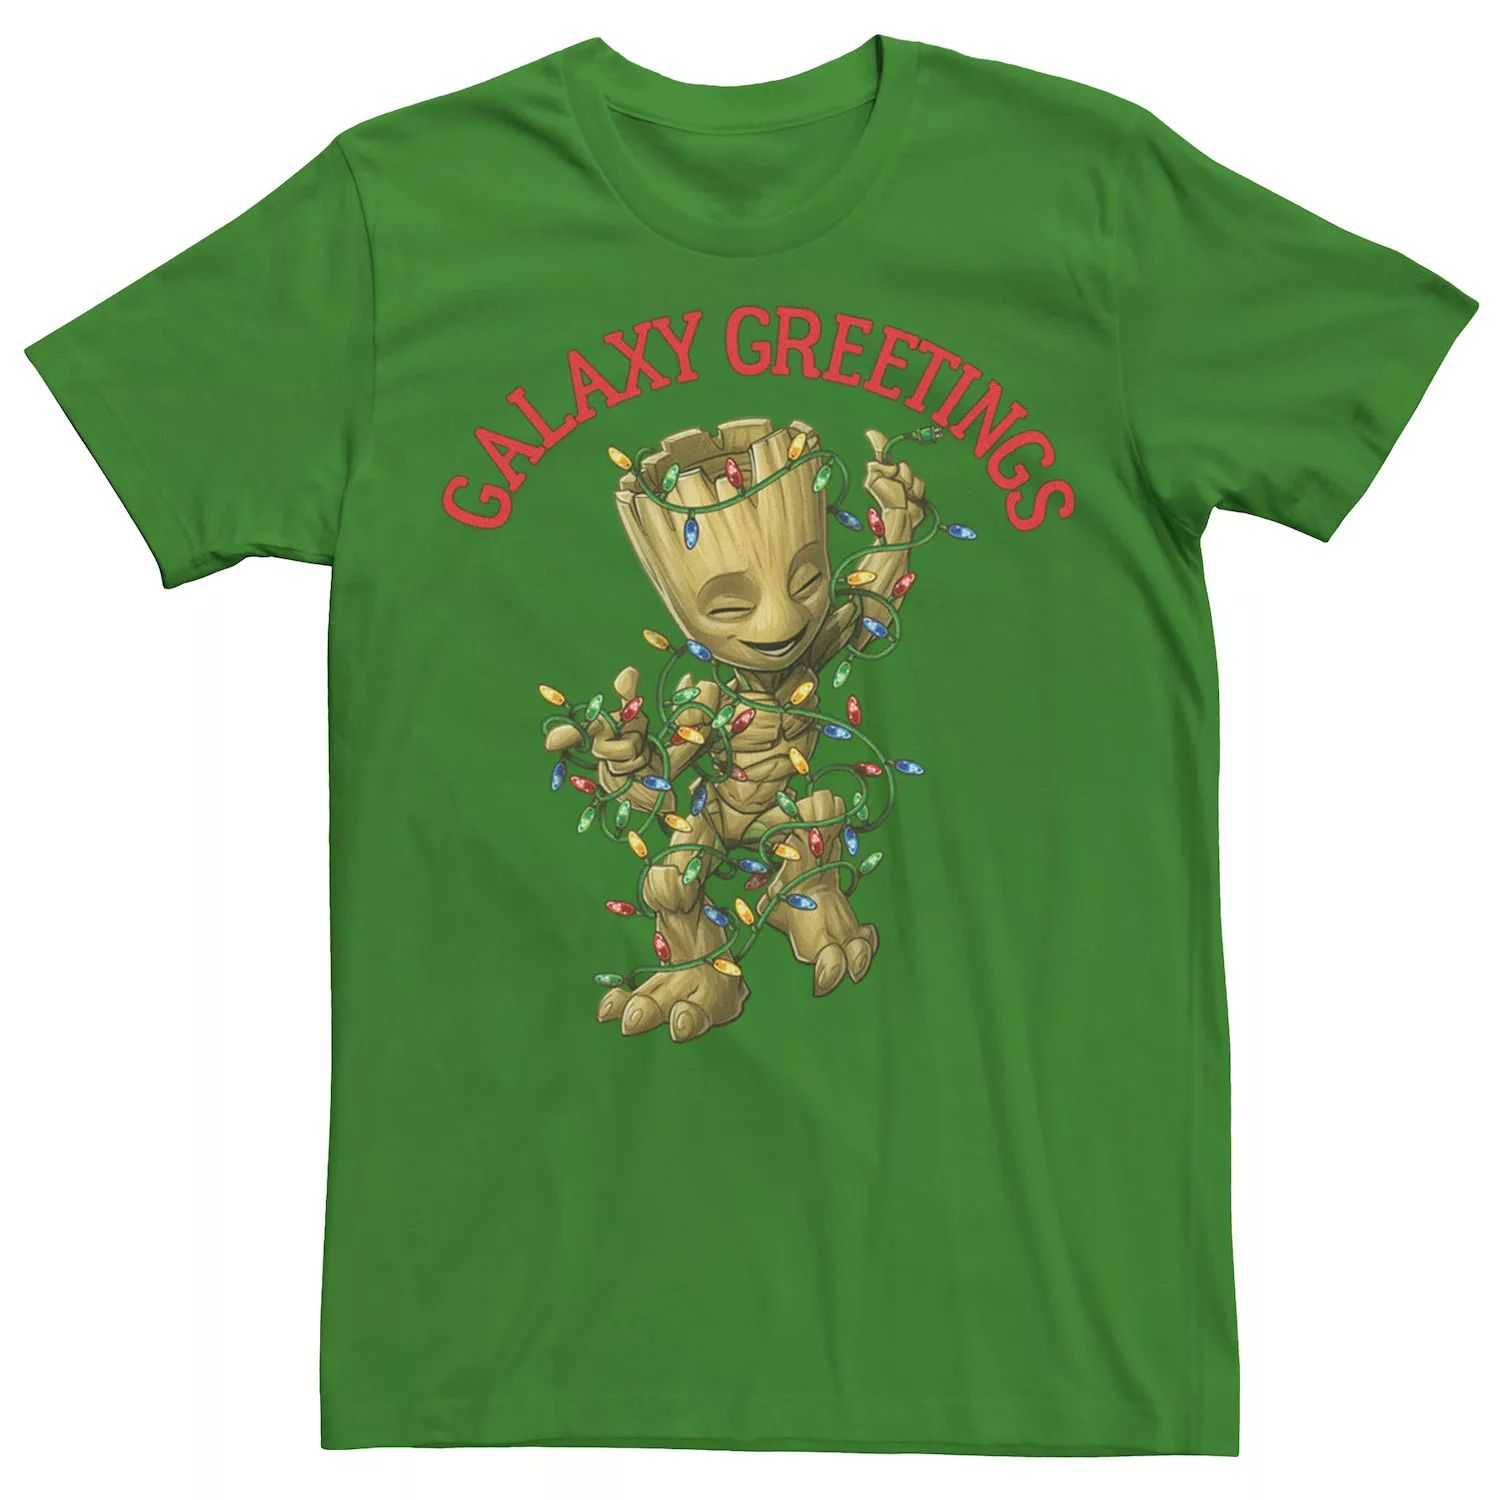 Мужская футболка с рисунком Marvel GOTG Groot Galaxy Greetings поло marvel gotg rocket racoon